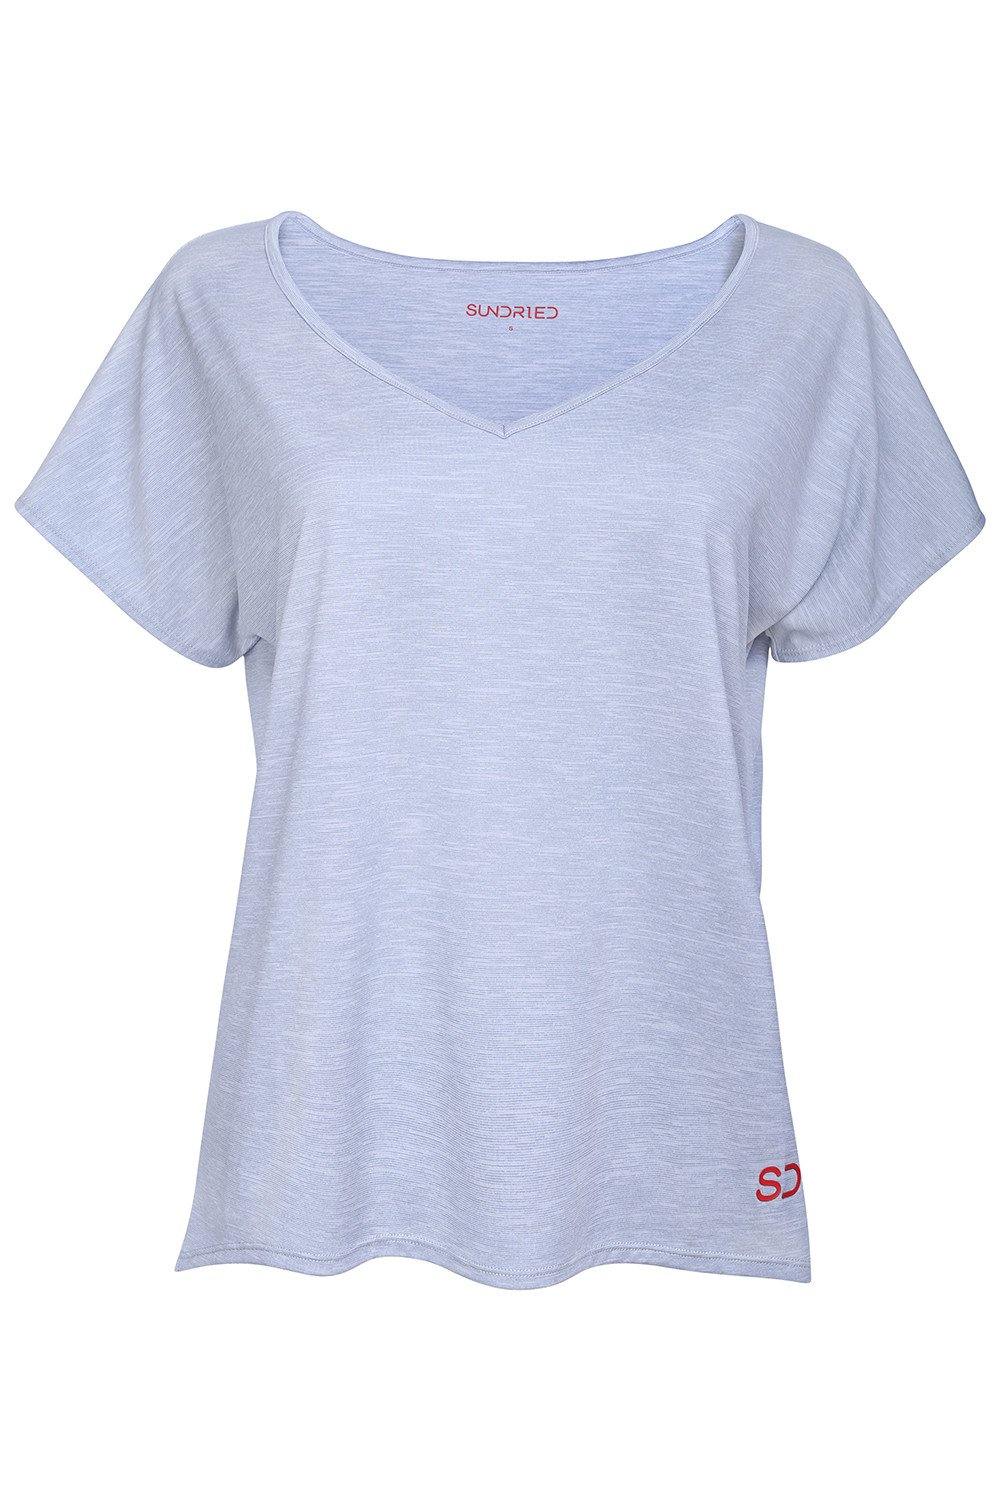 Sundried Grivola 2.0 Women's Loose Top T-Shirt XS Slate SD0003 XS Slate Activewear